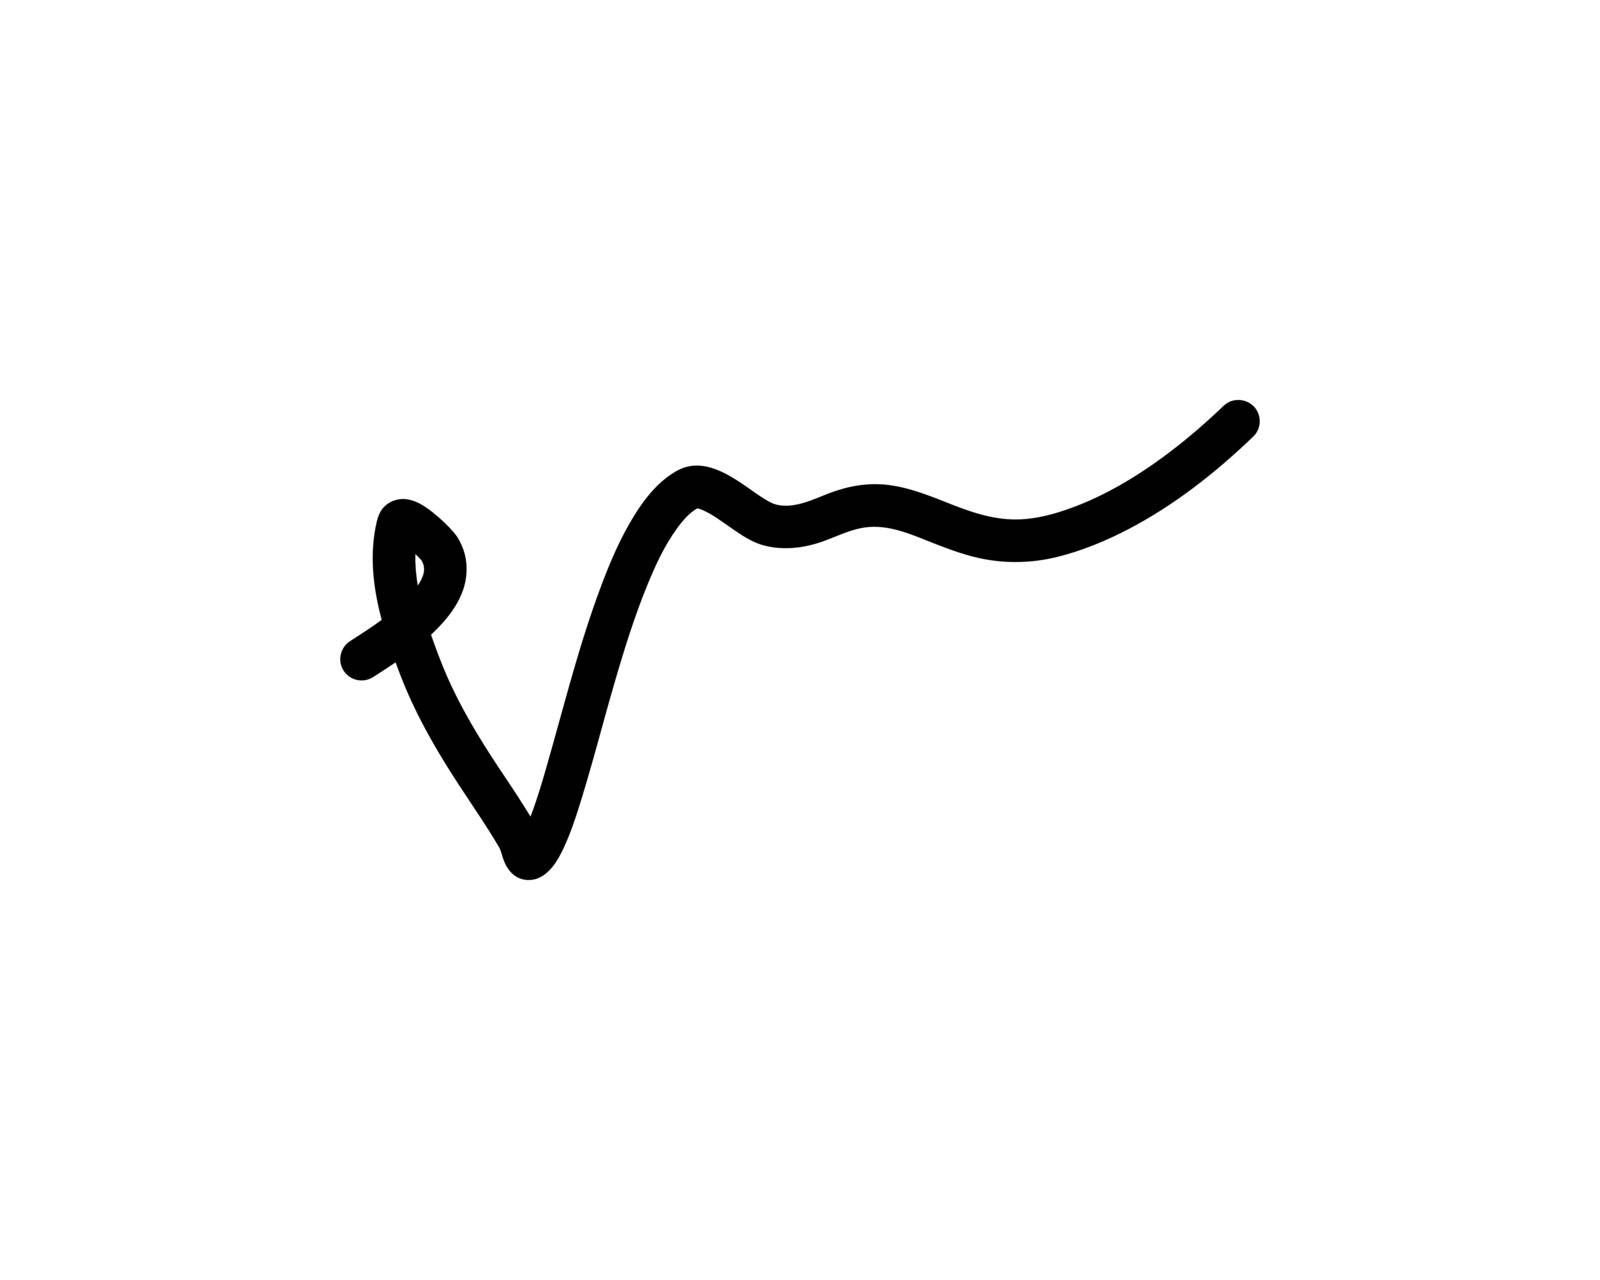 v letter signature logo by meisuseno